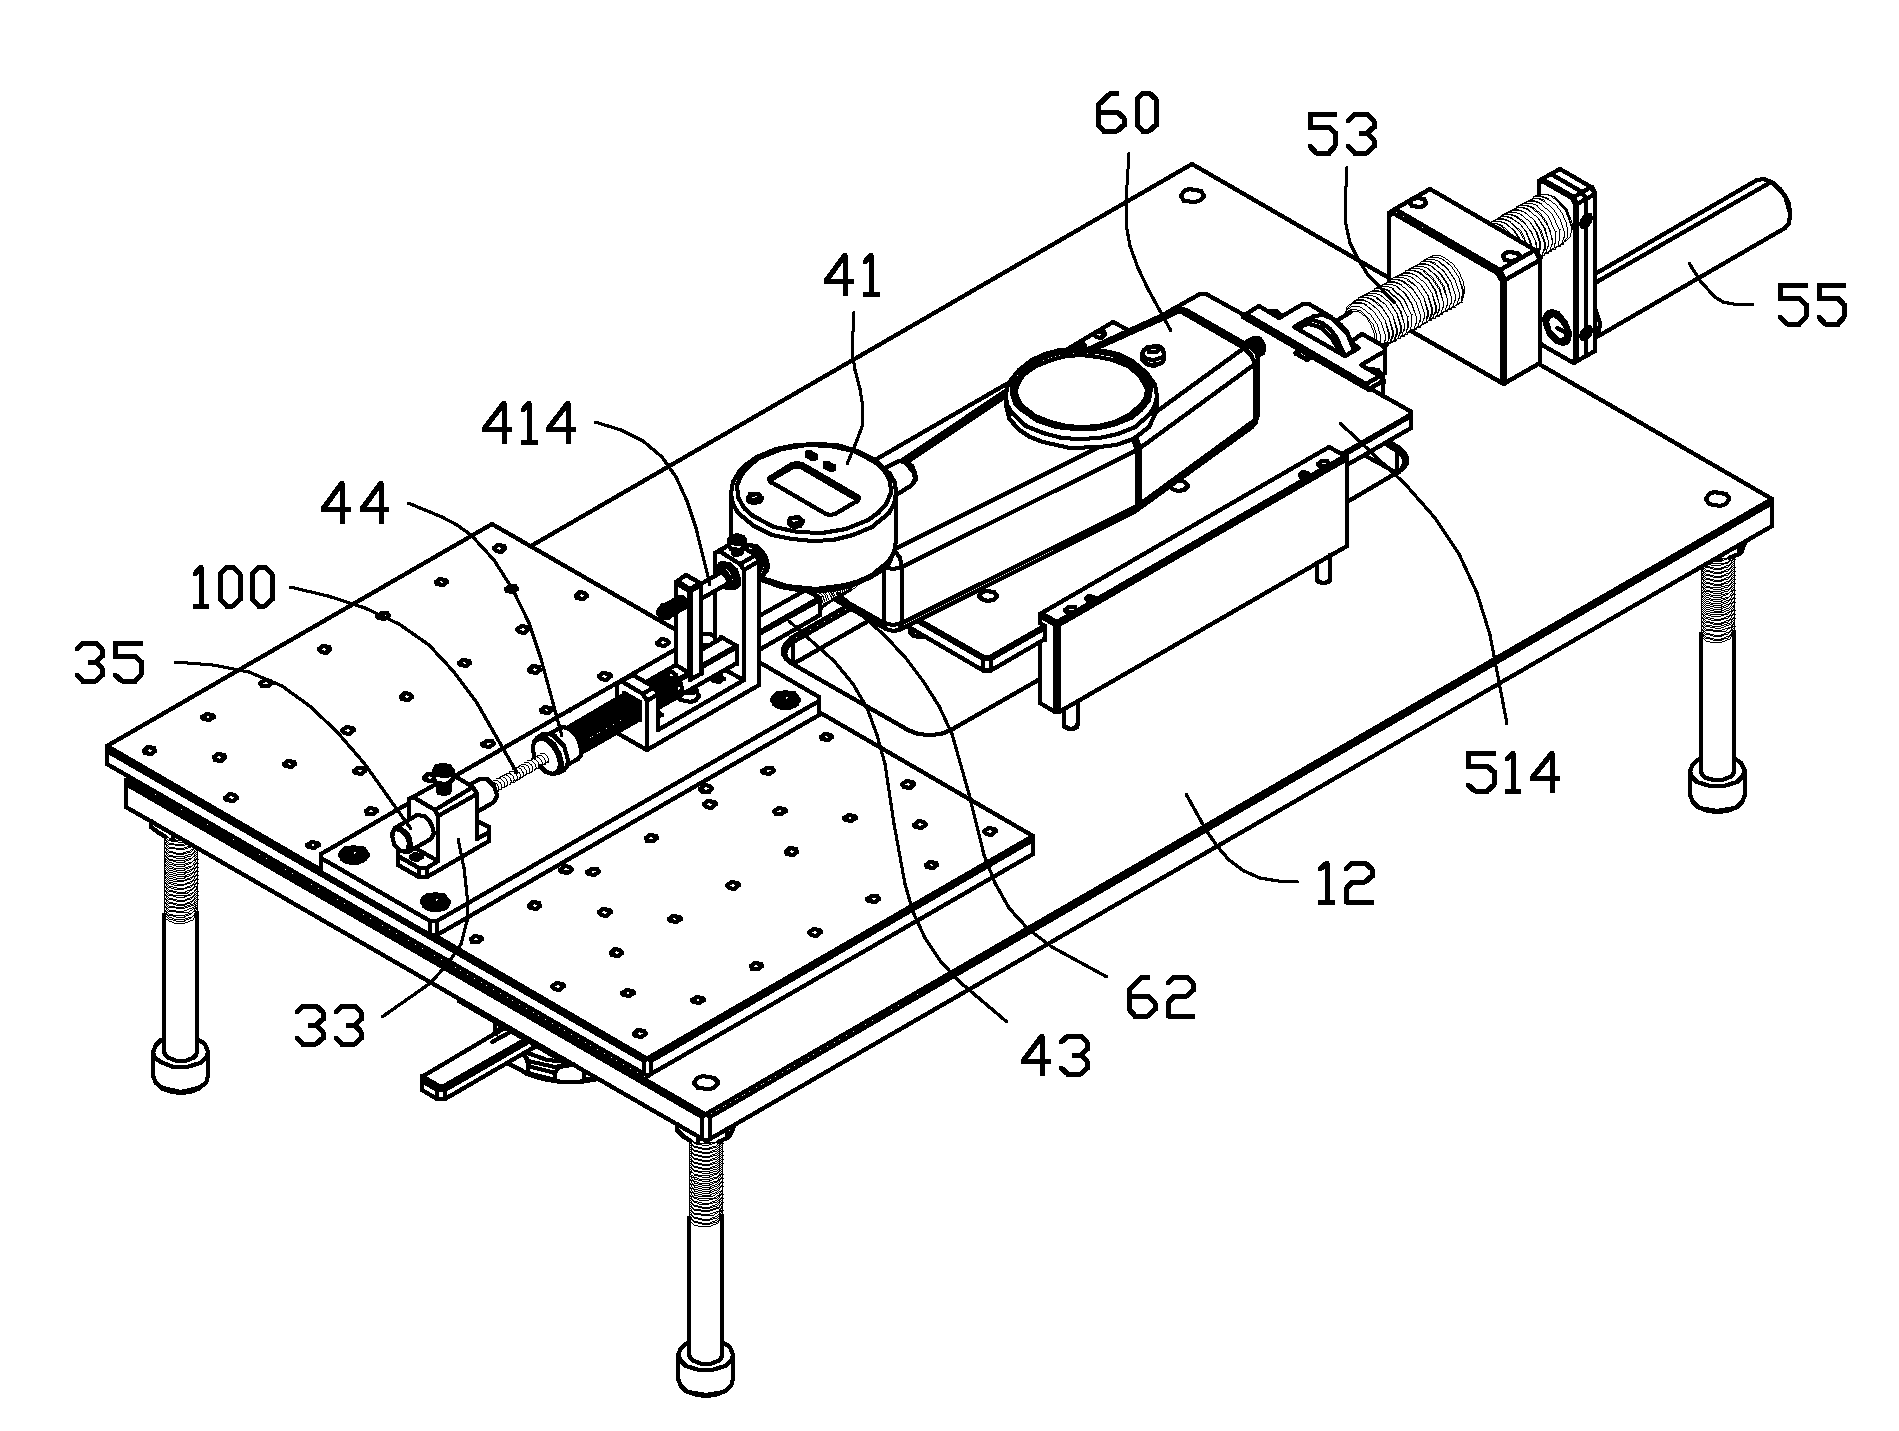 Measurement apparatus for measuring elasticity coefficient of coil spring